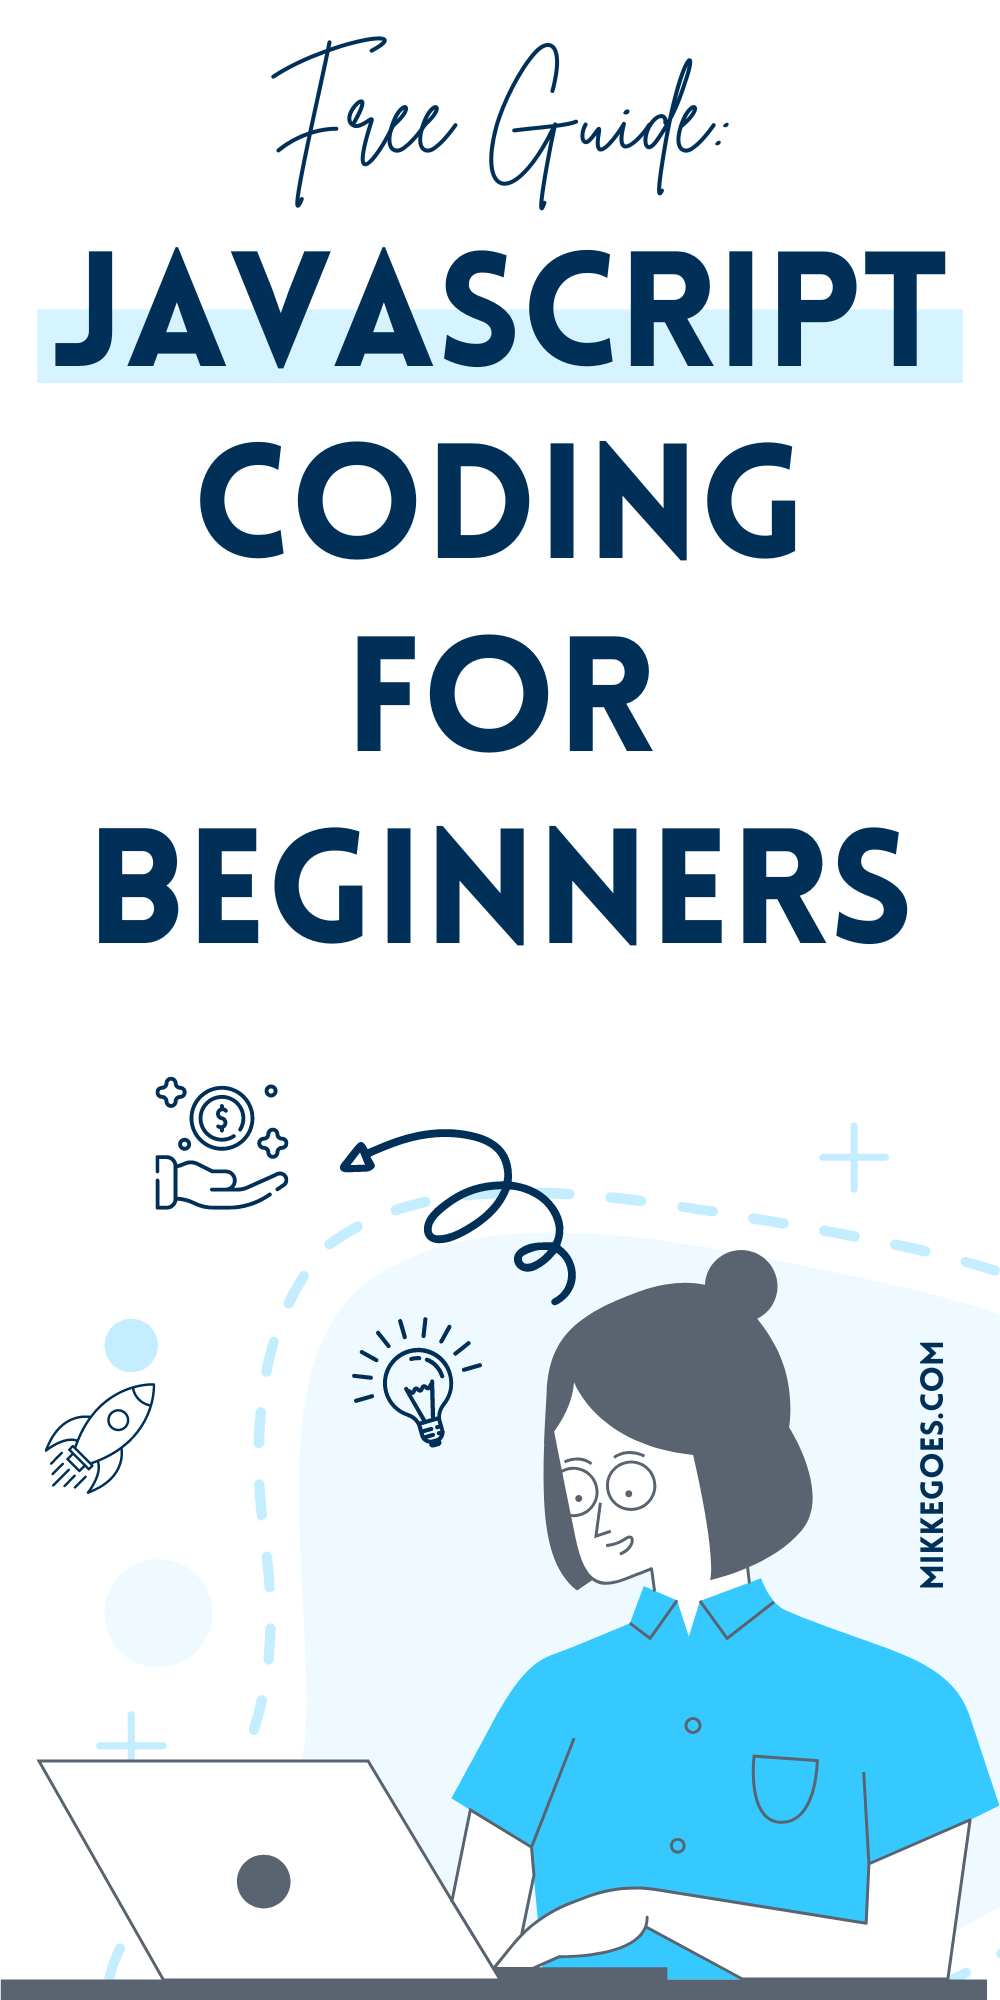 Free Guide – Start learning JavaScript coding for beginners